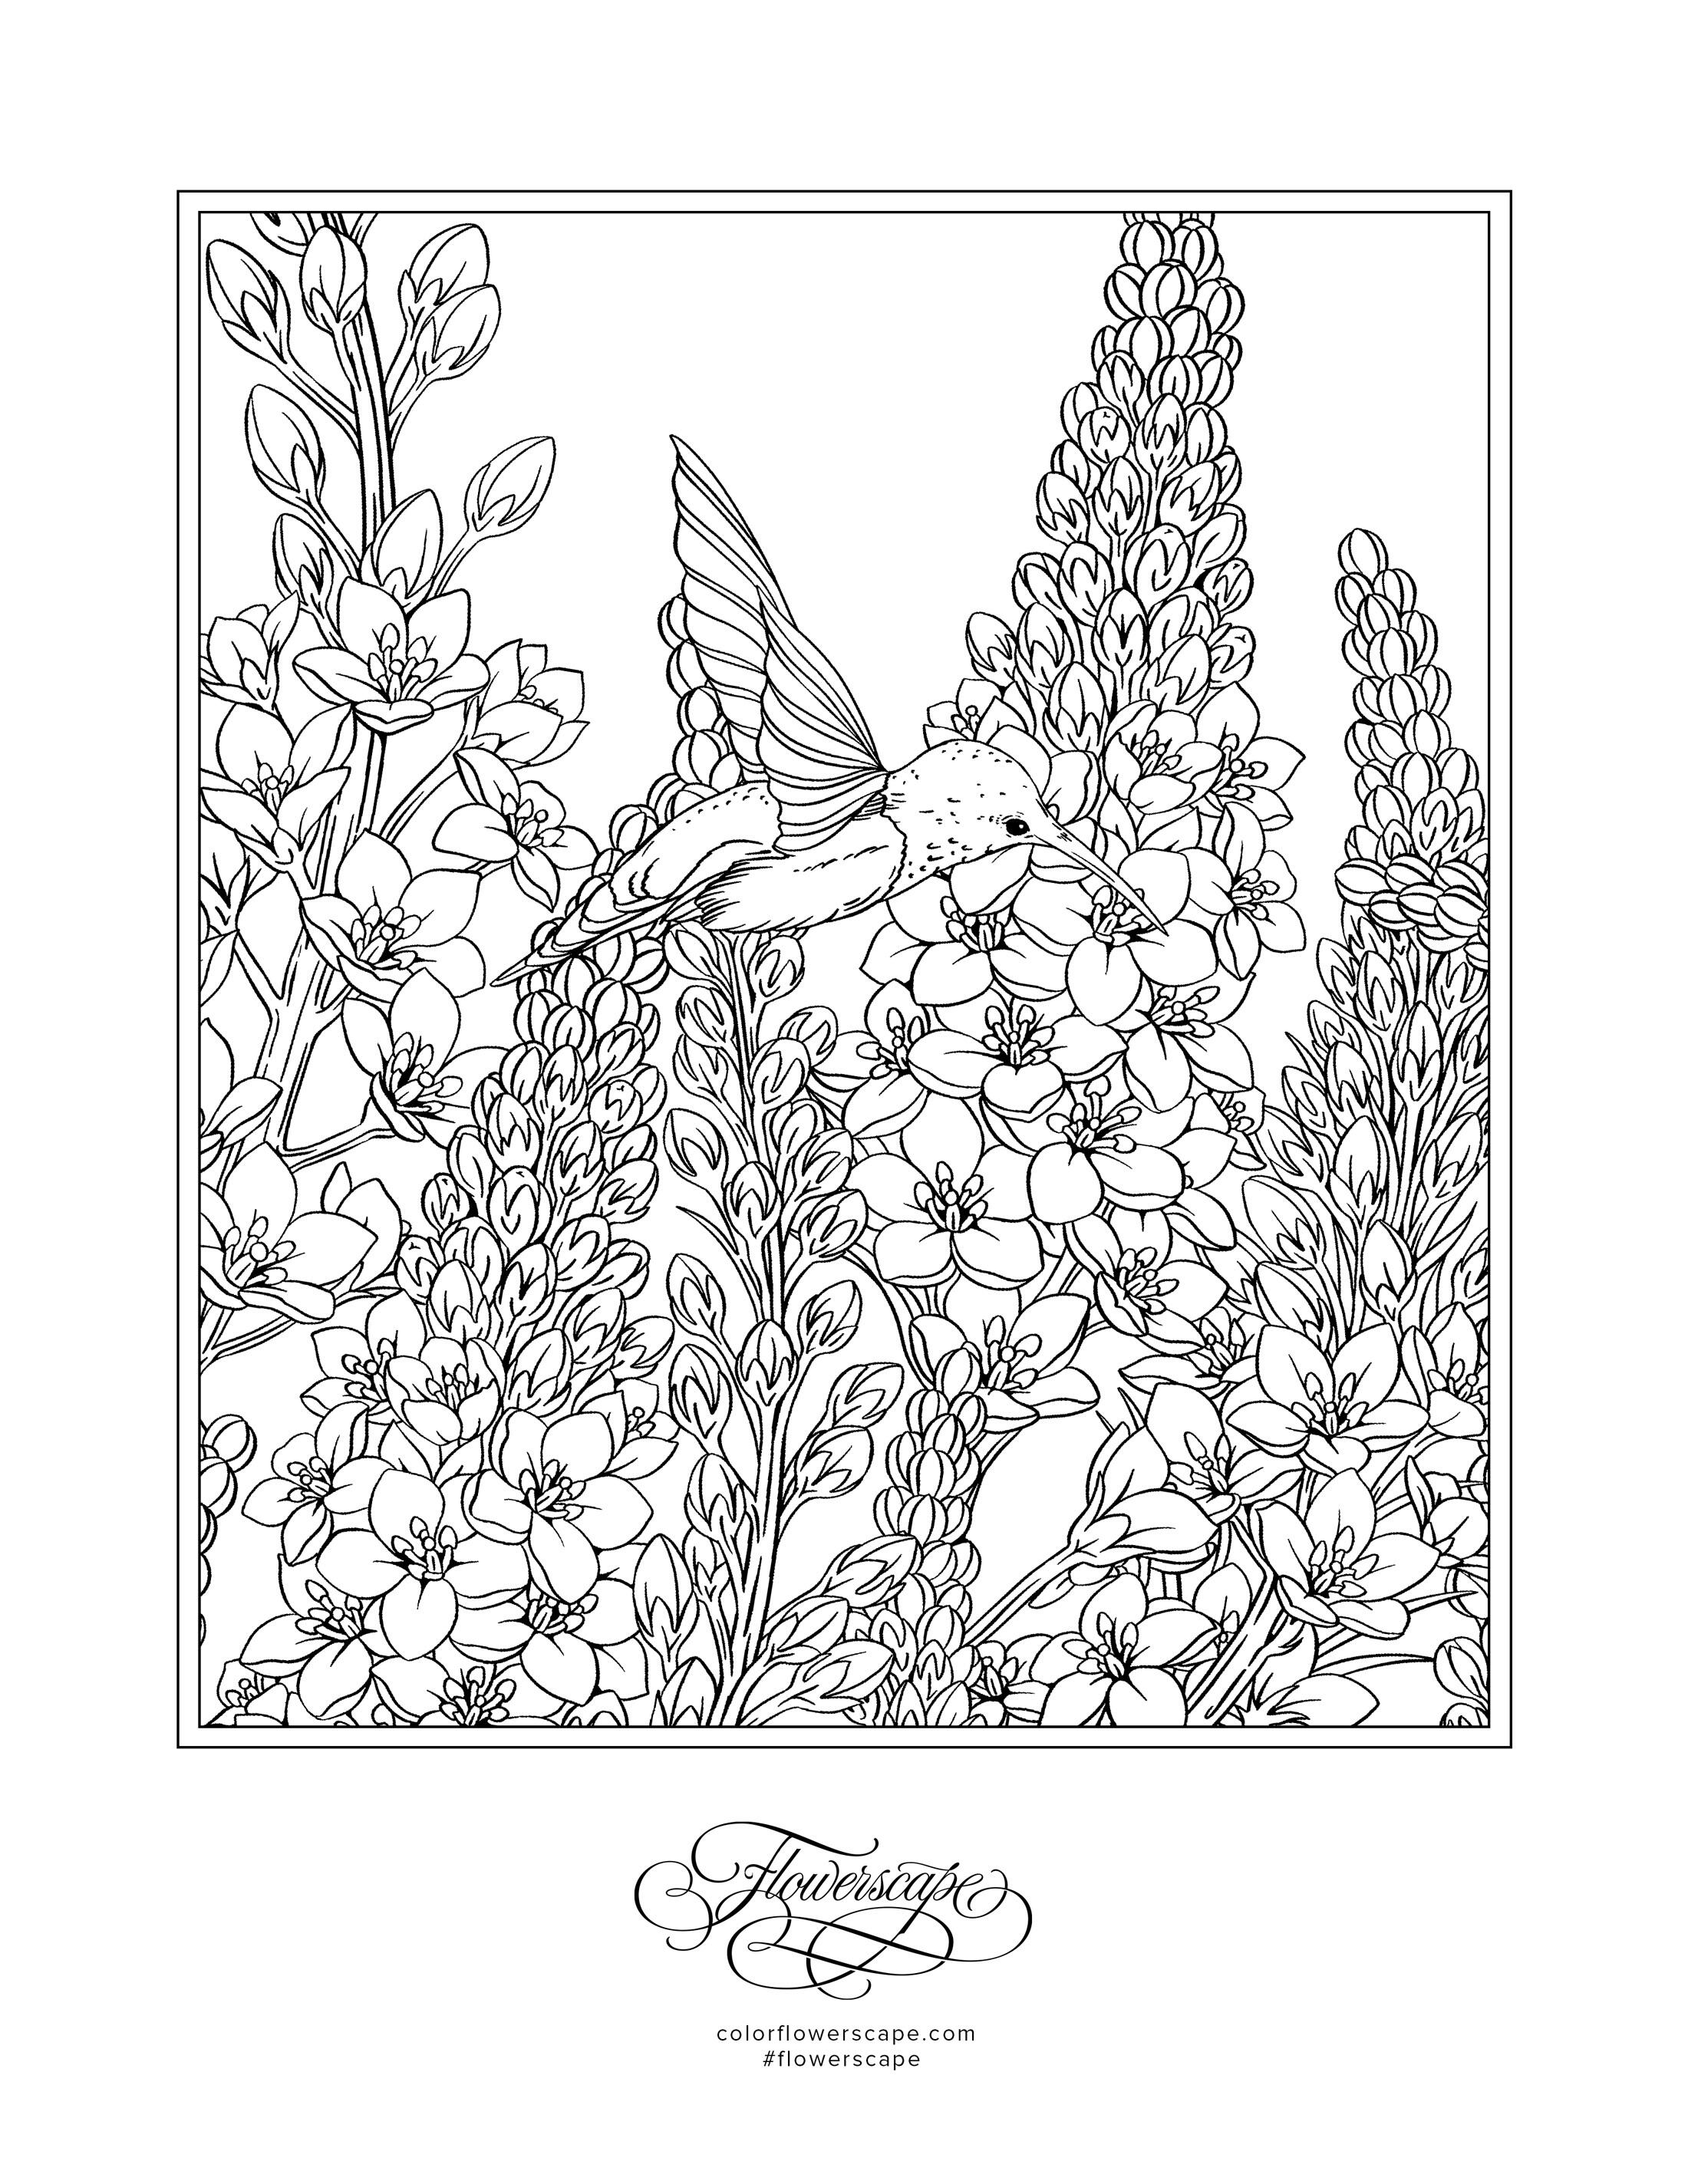 Hummingbird Coloring Page | FaveCrafts.com